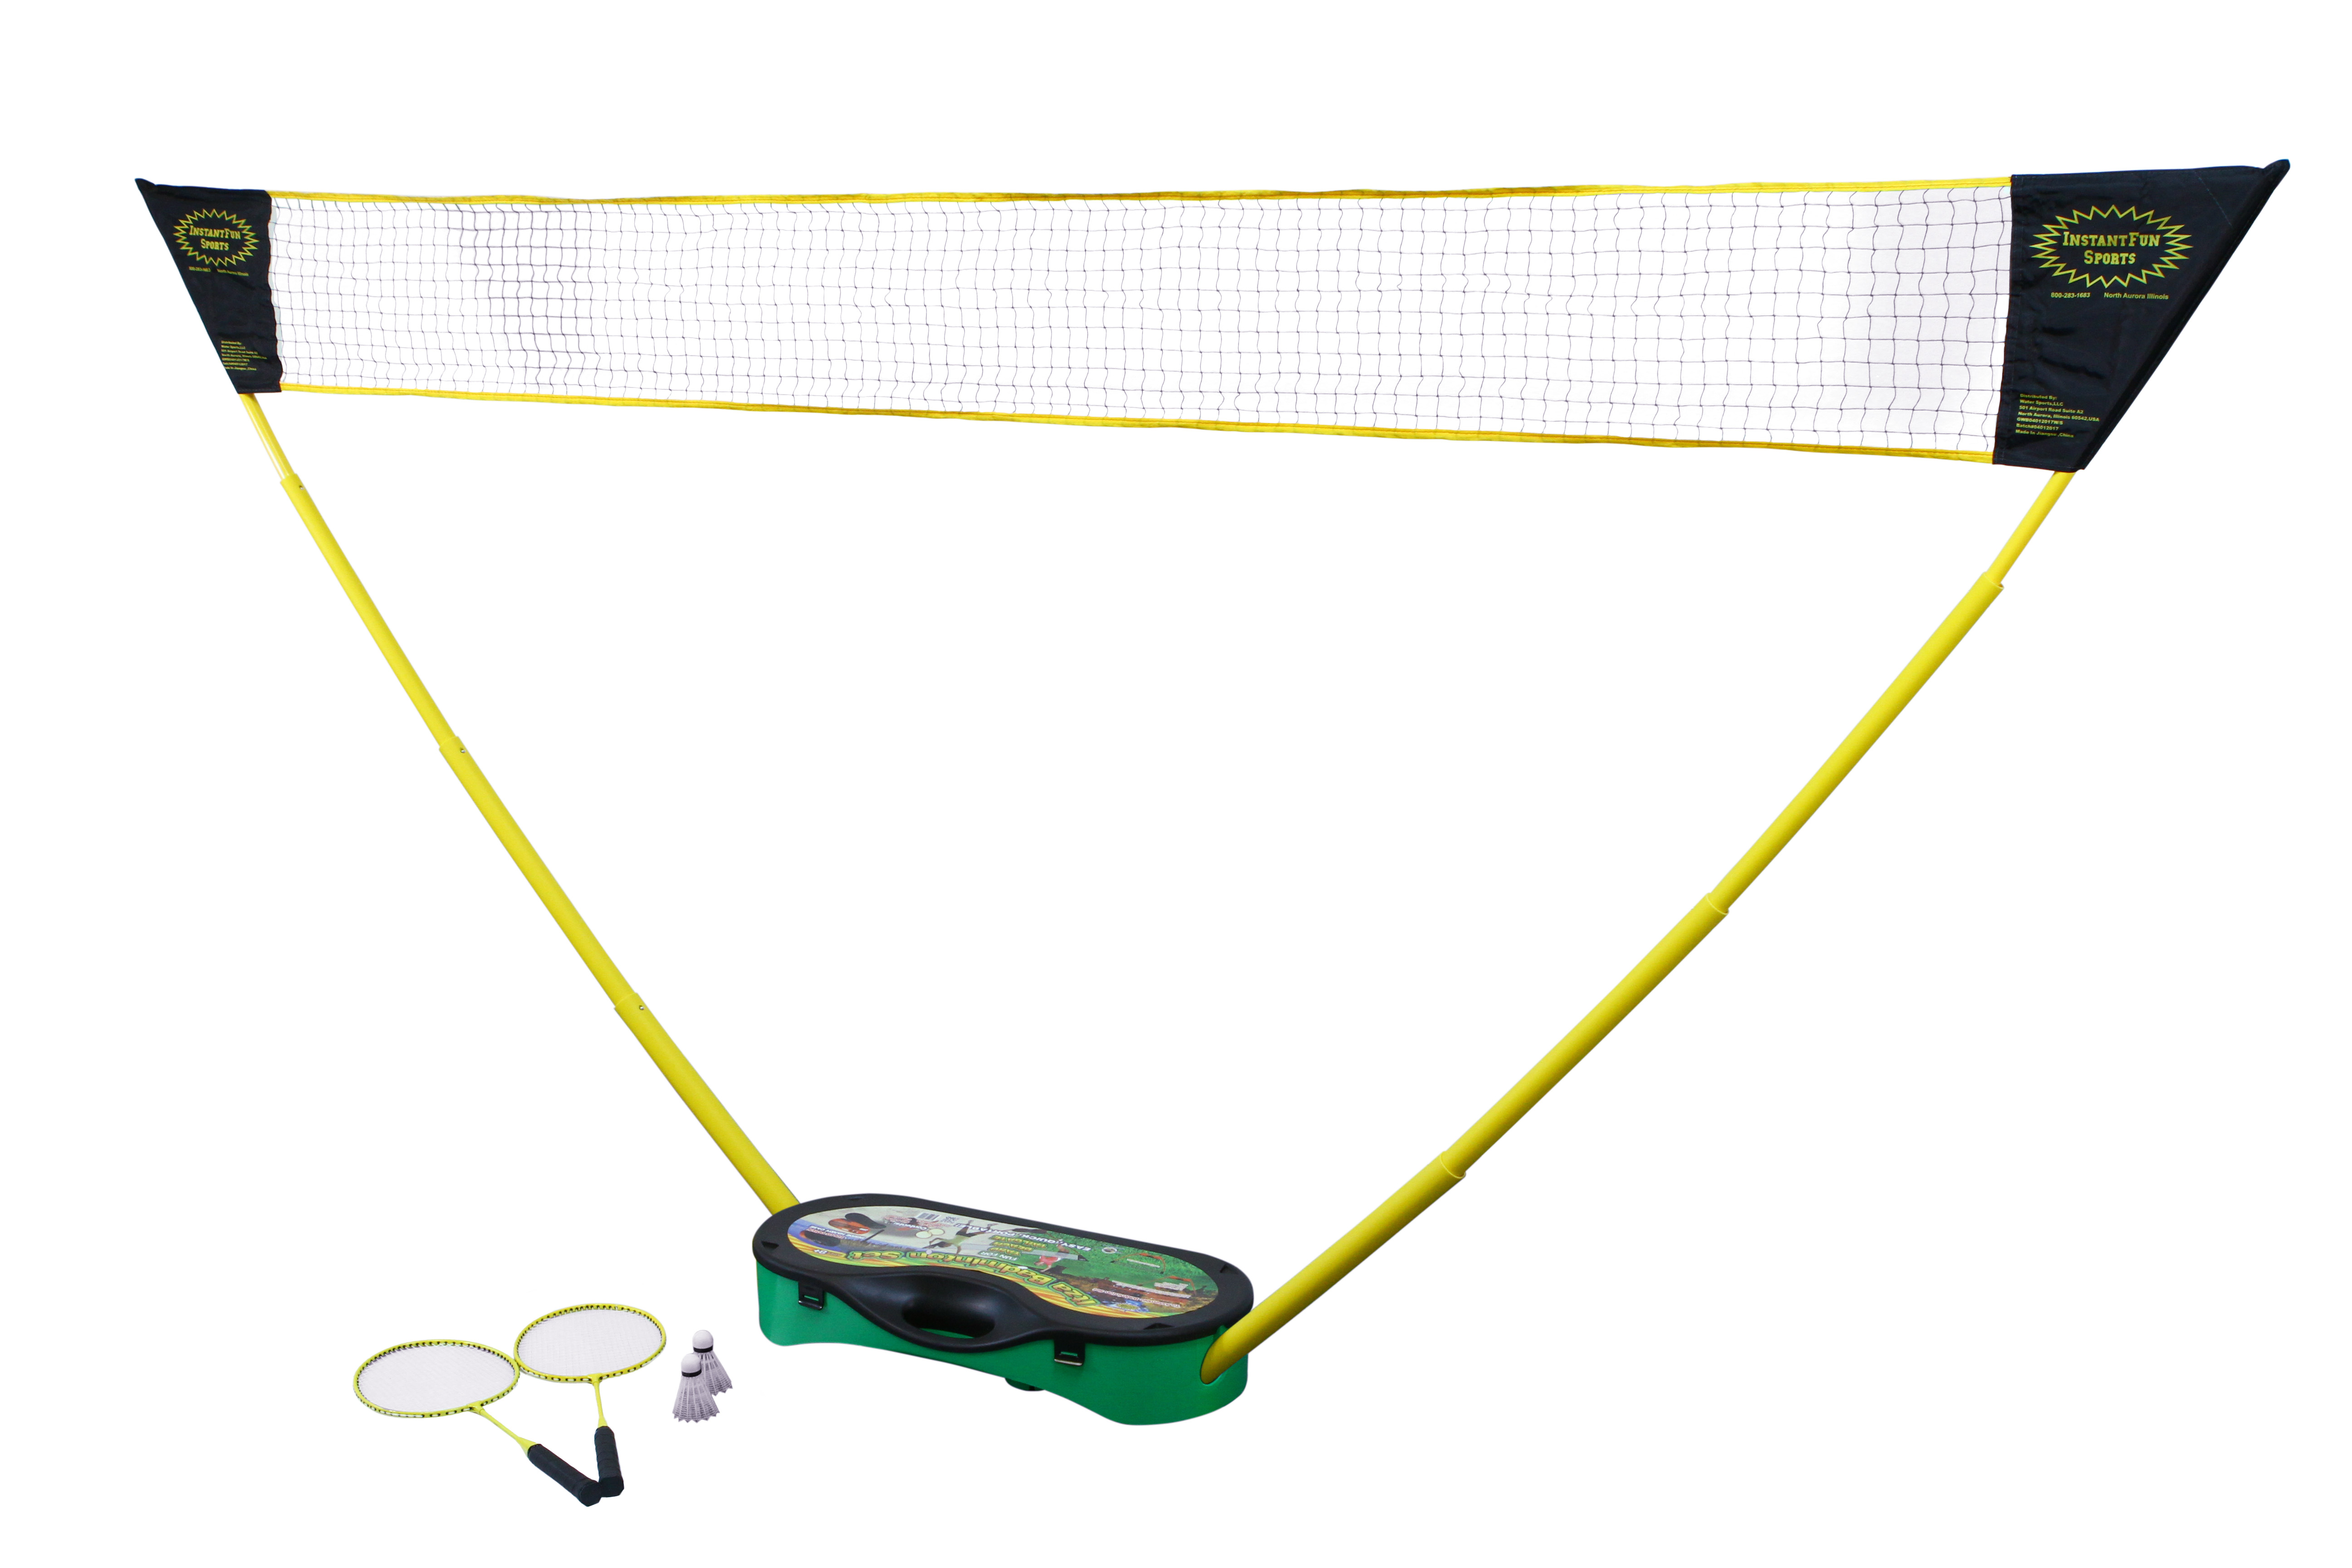 Itza Badminton Set W/ Net, Poles, 2 Rackets & Shuttlecocks, for Outdoor Use - image 1 of 5